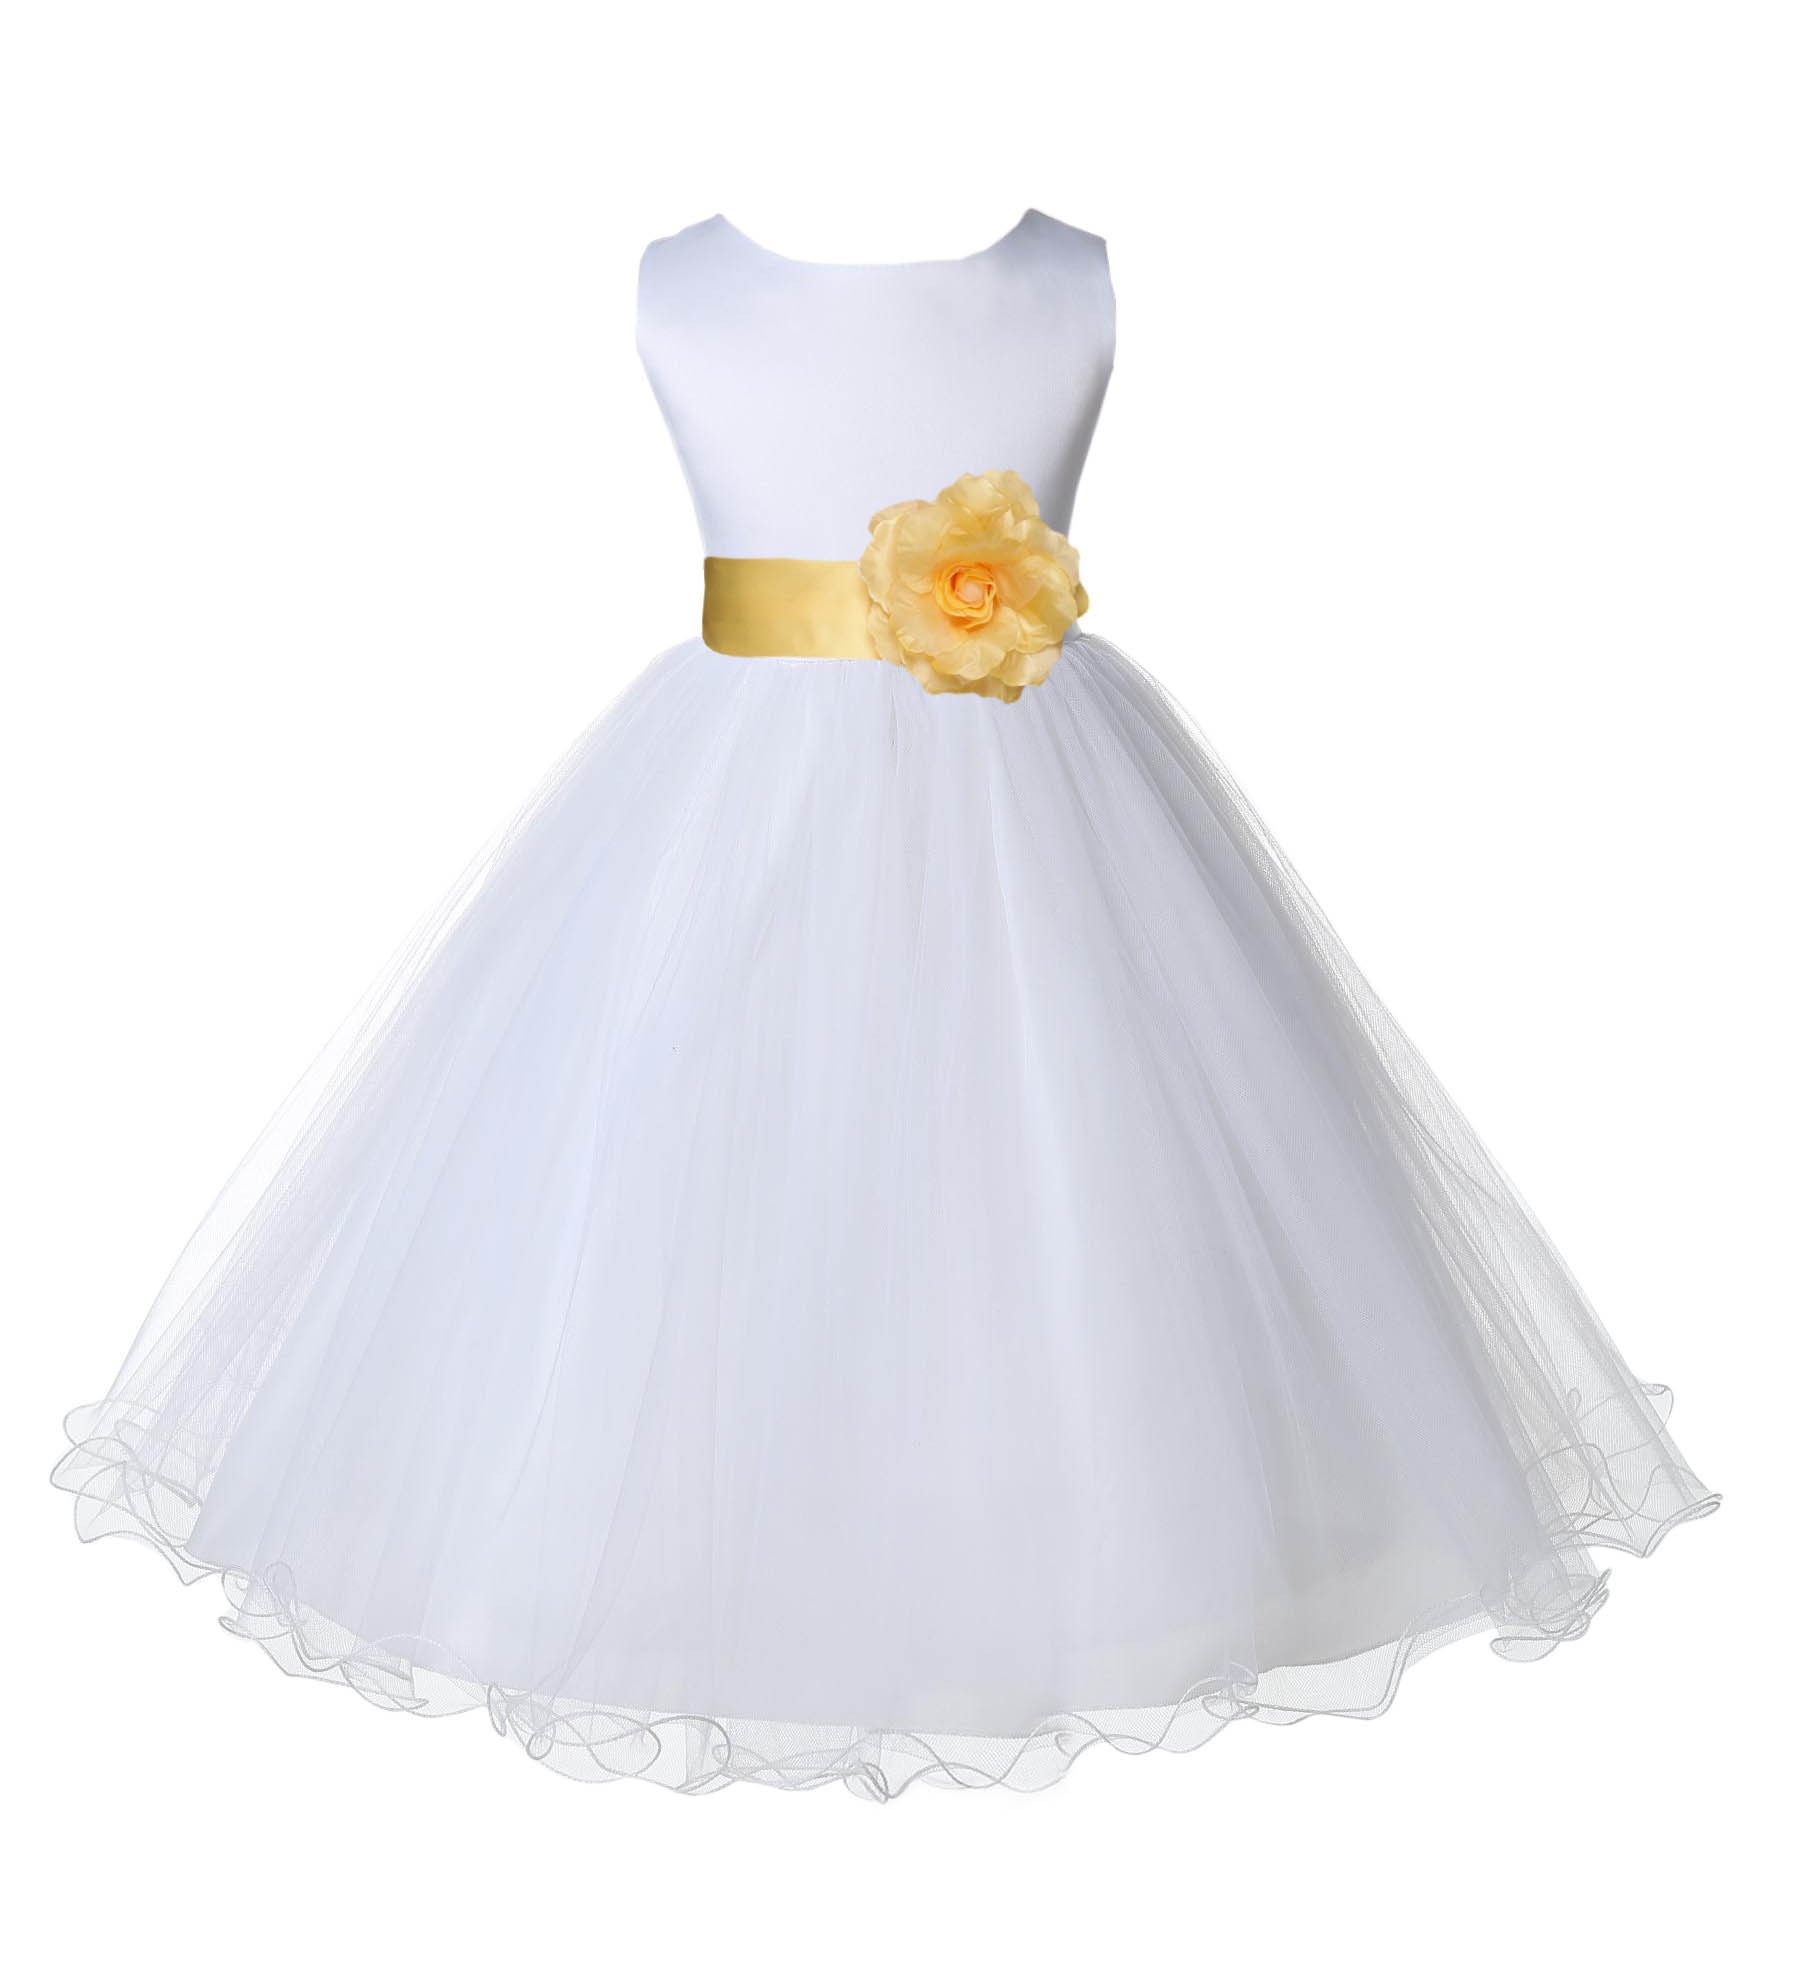 White/Canary Tulle Rattail Edge Flower Girl Dress Wedding Bridal 829S